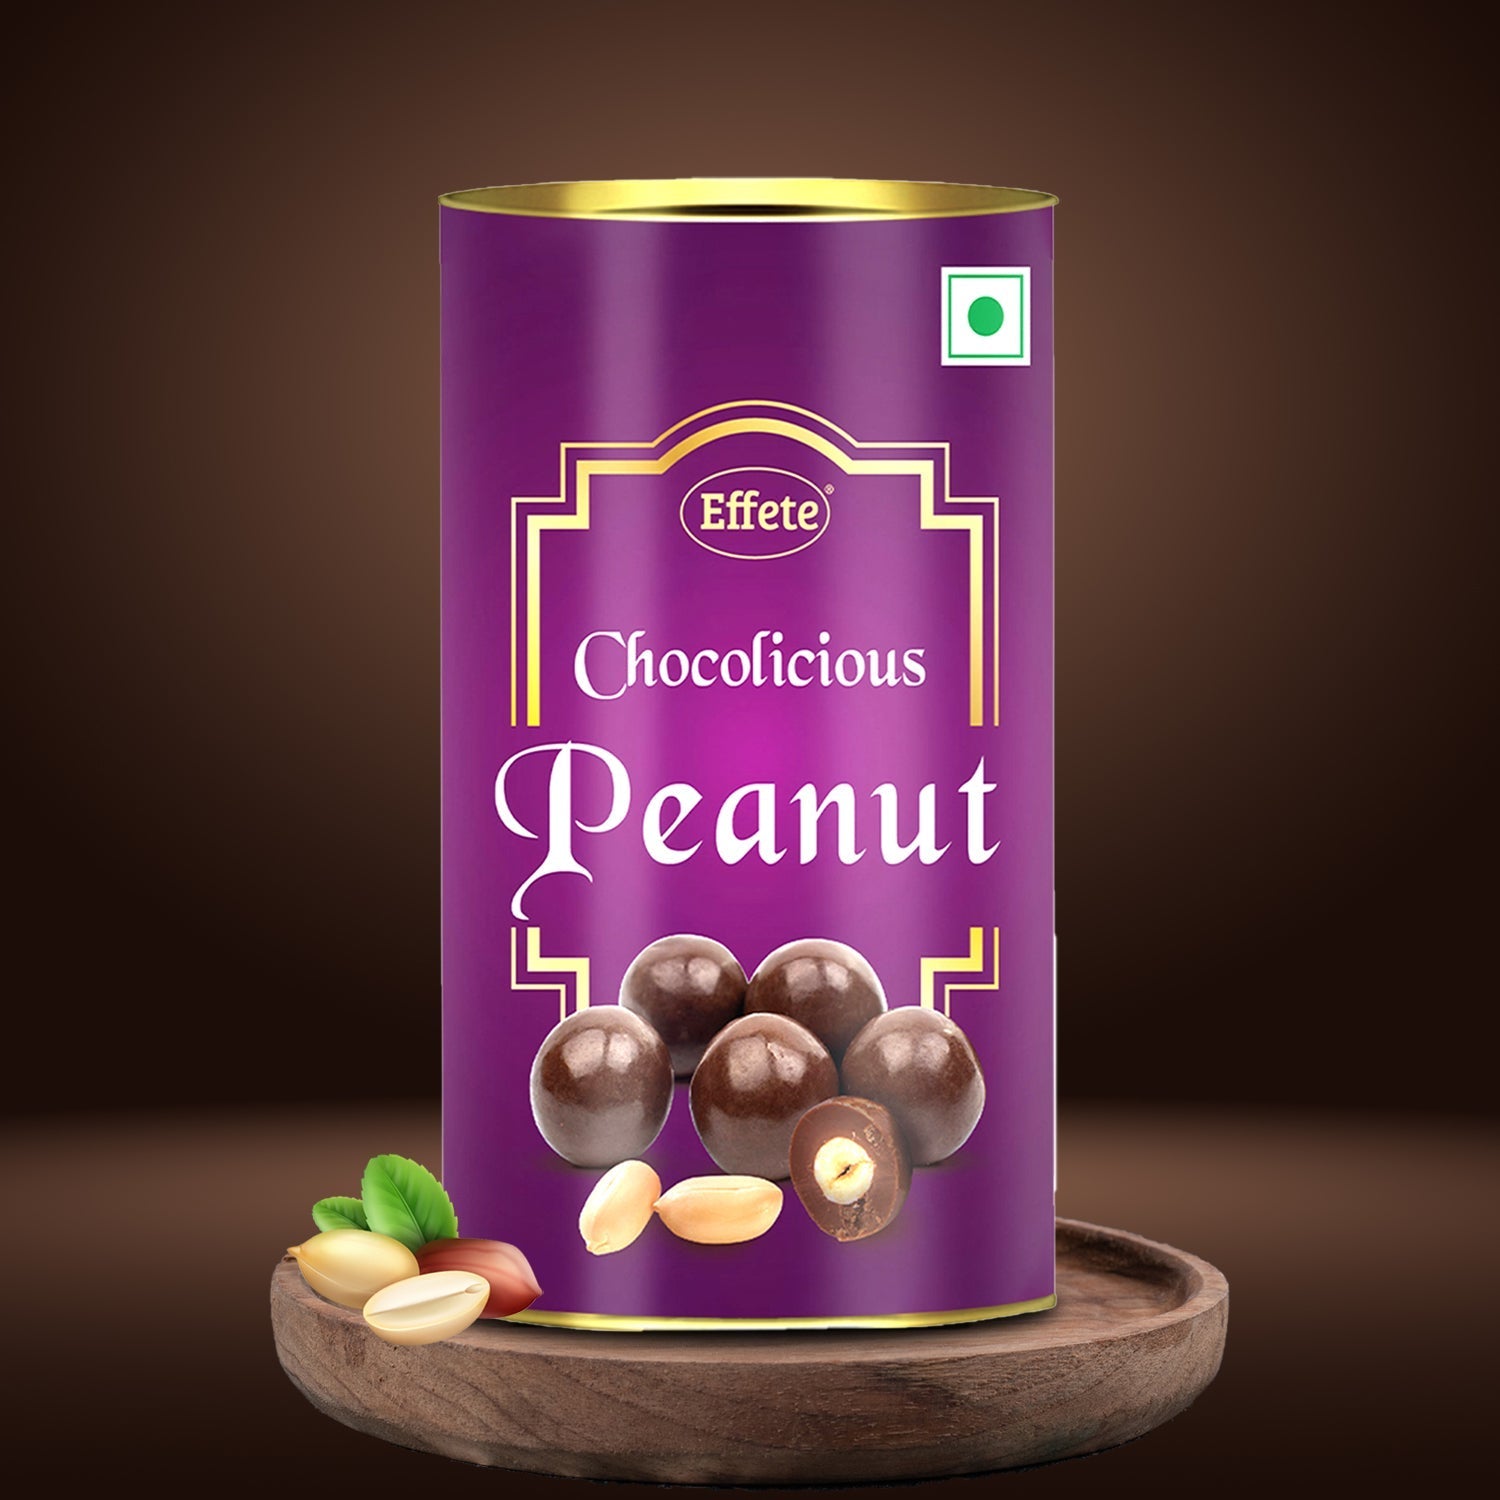 7810 Peanut Chocolate (96 Gms) freeshipping - DeoDap